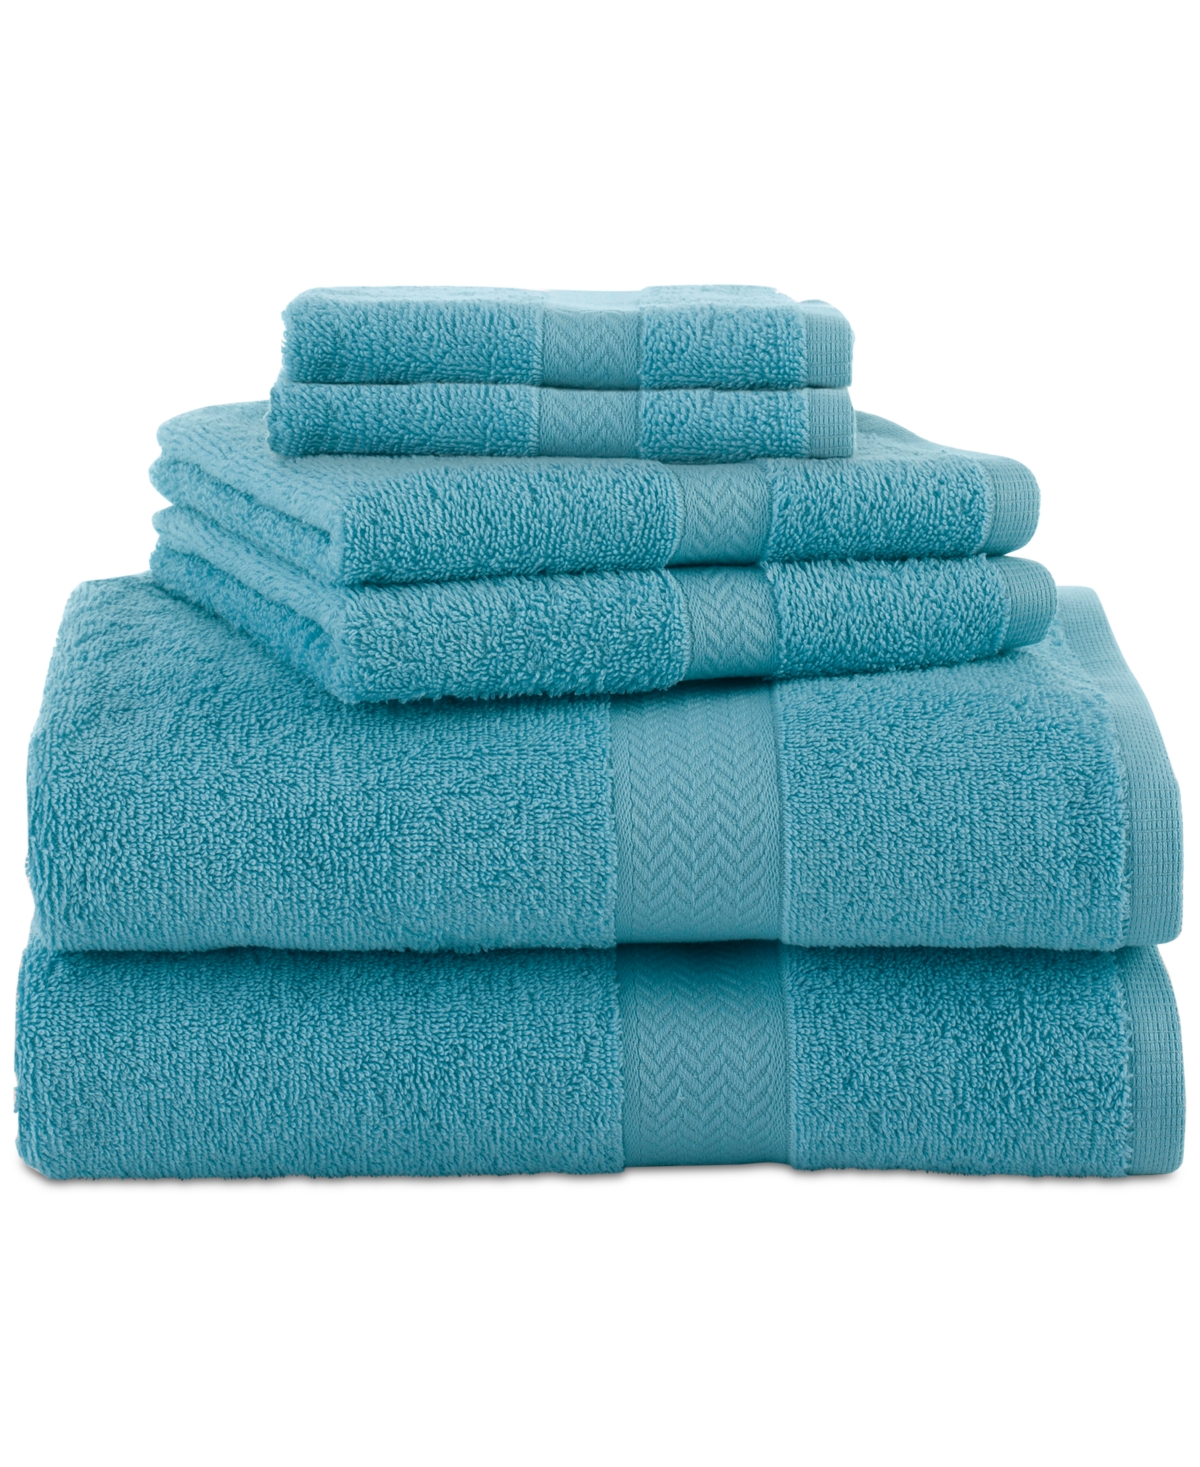 Martex Ringspun Cotton 6-pc. Towel Set In Island Blue